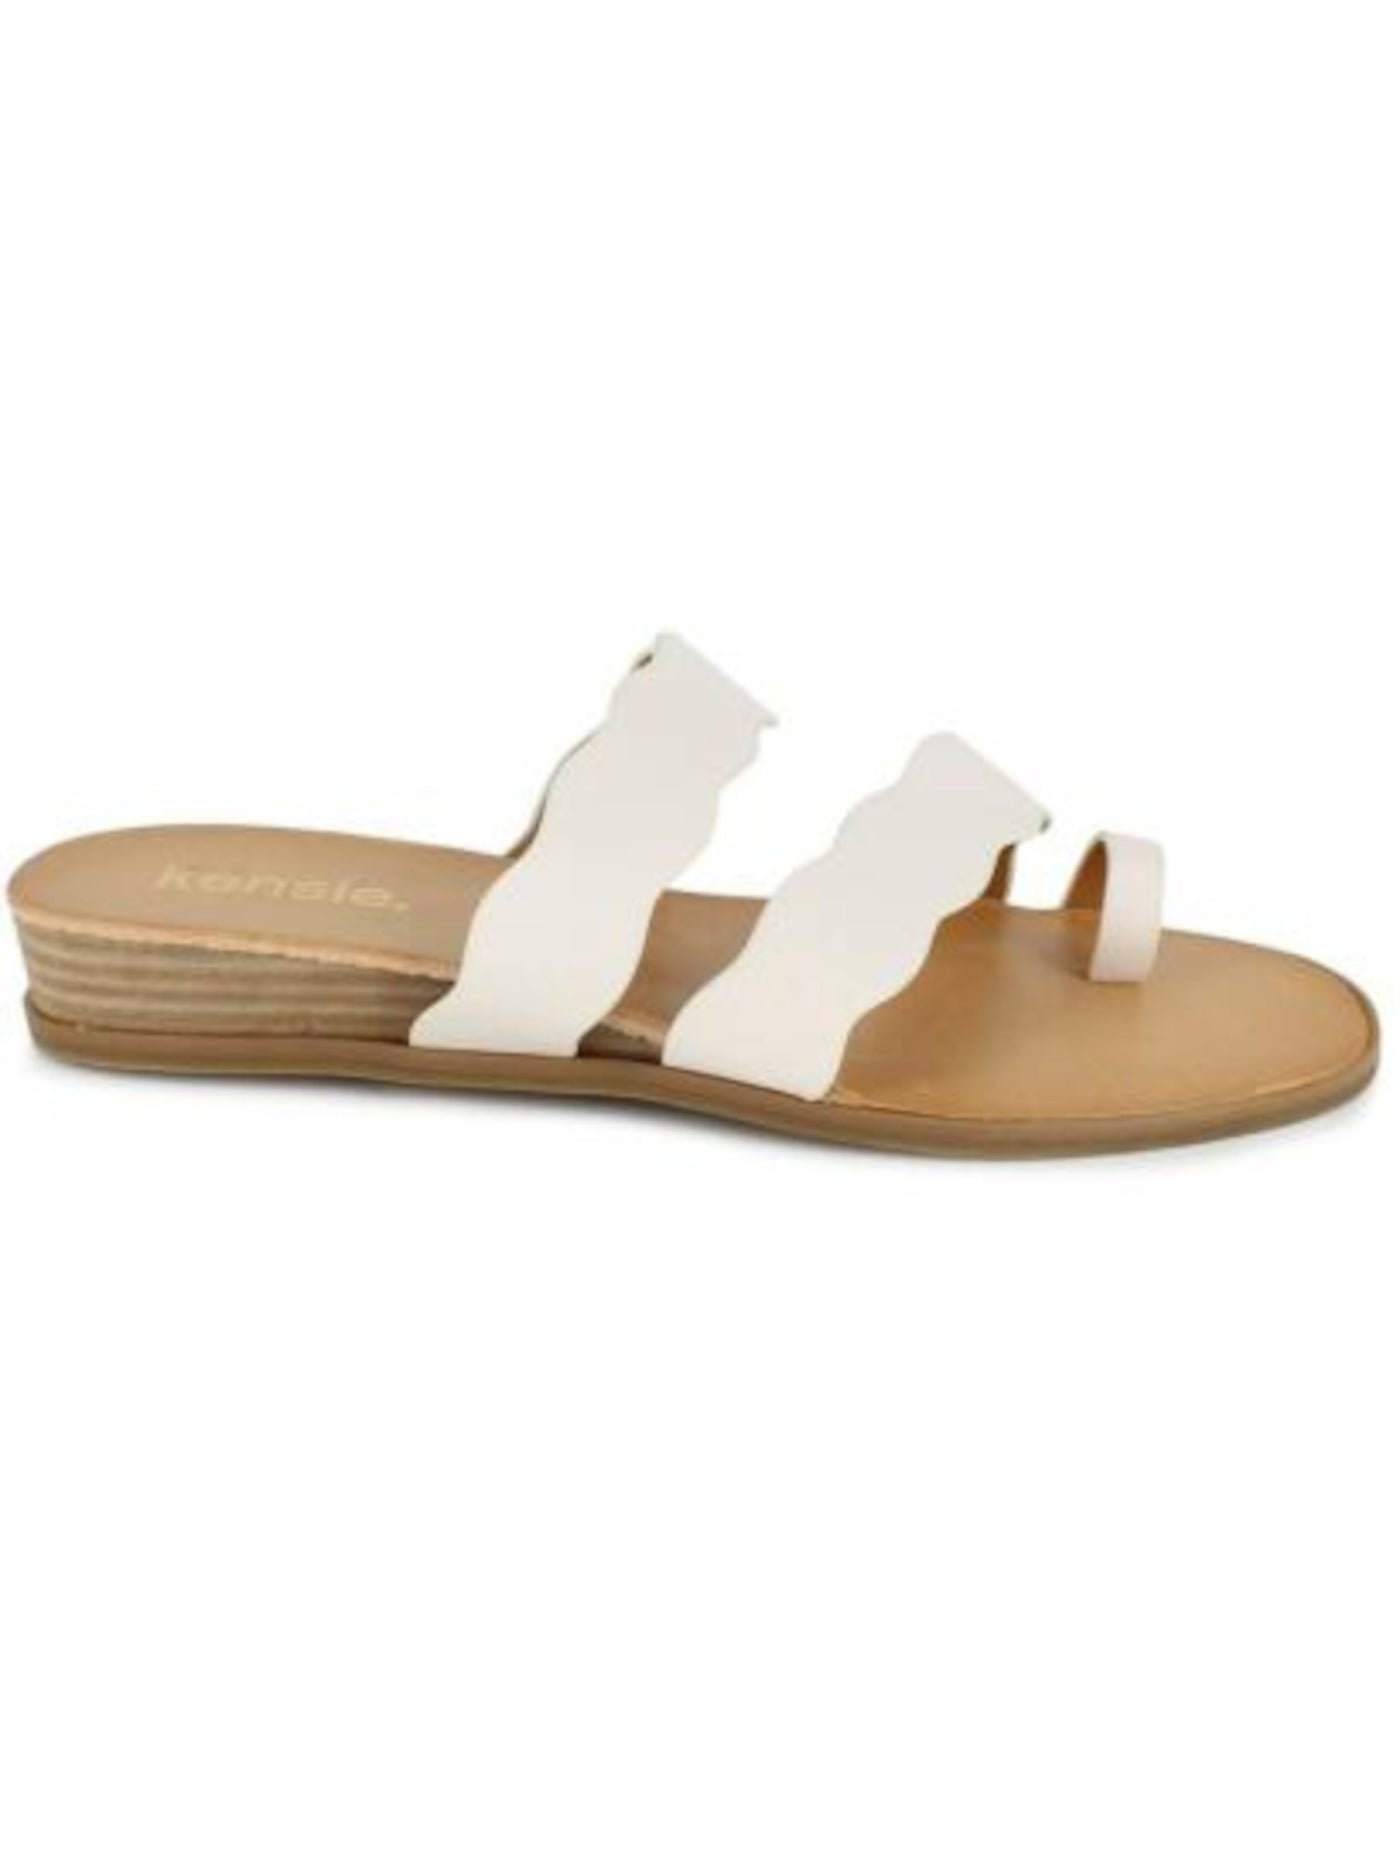 KENSIE Womens White Toe Loop Strappy Scalloped Arjuna Round Toe Wedge Slip On Slide Sandals Shoes 11 M